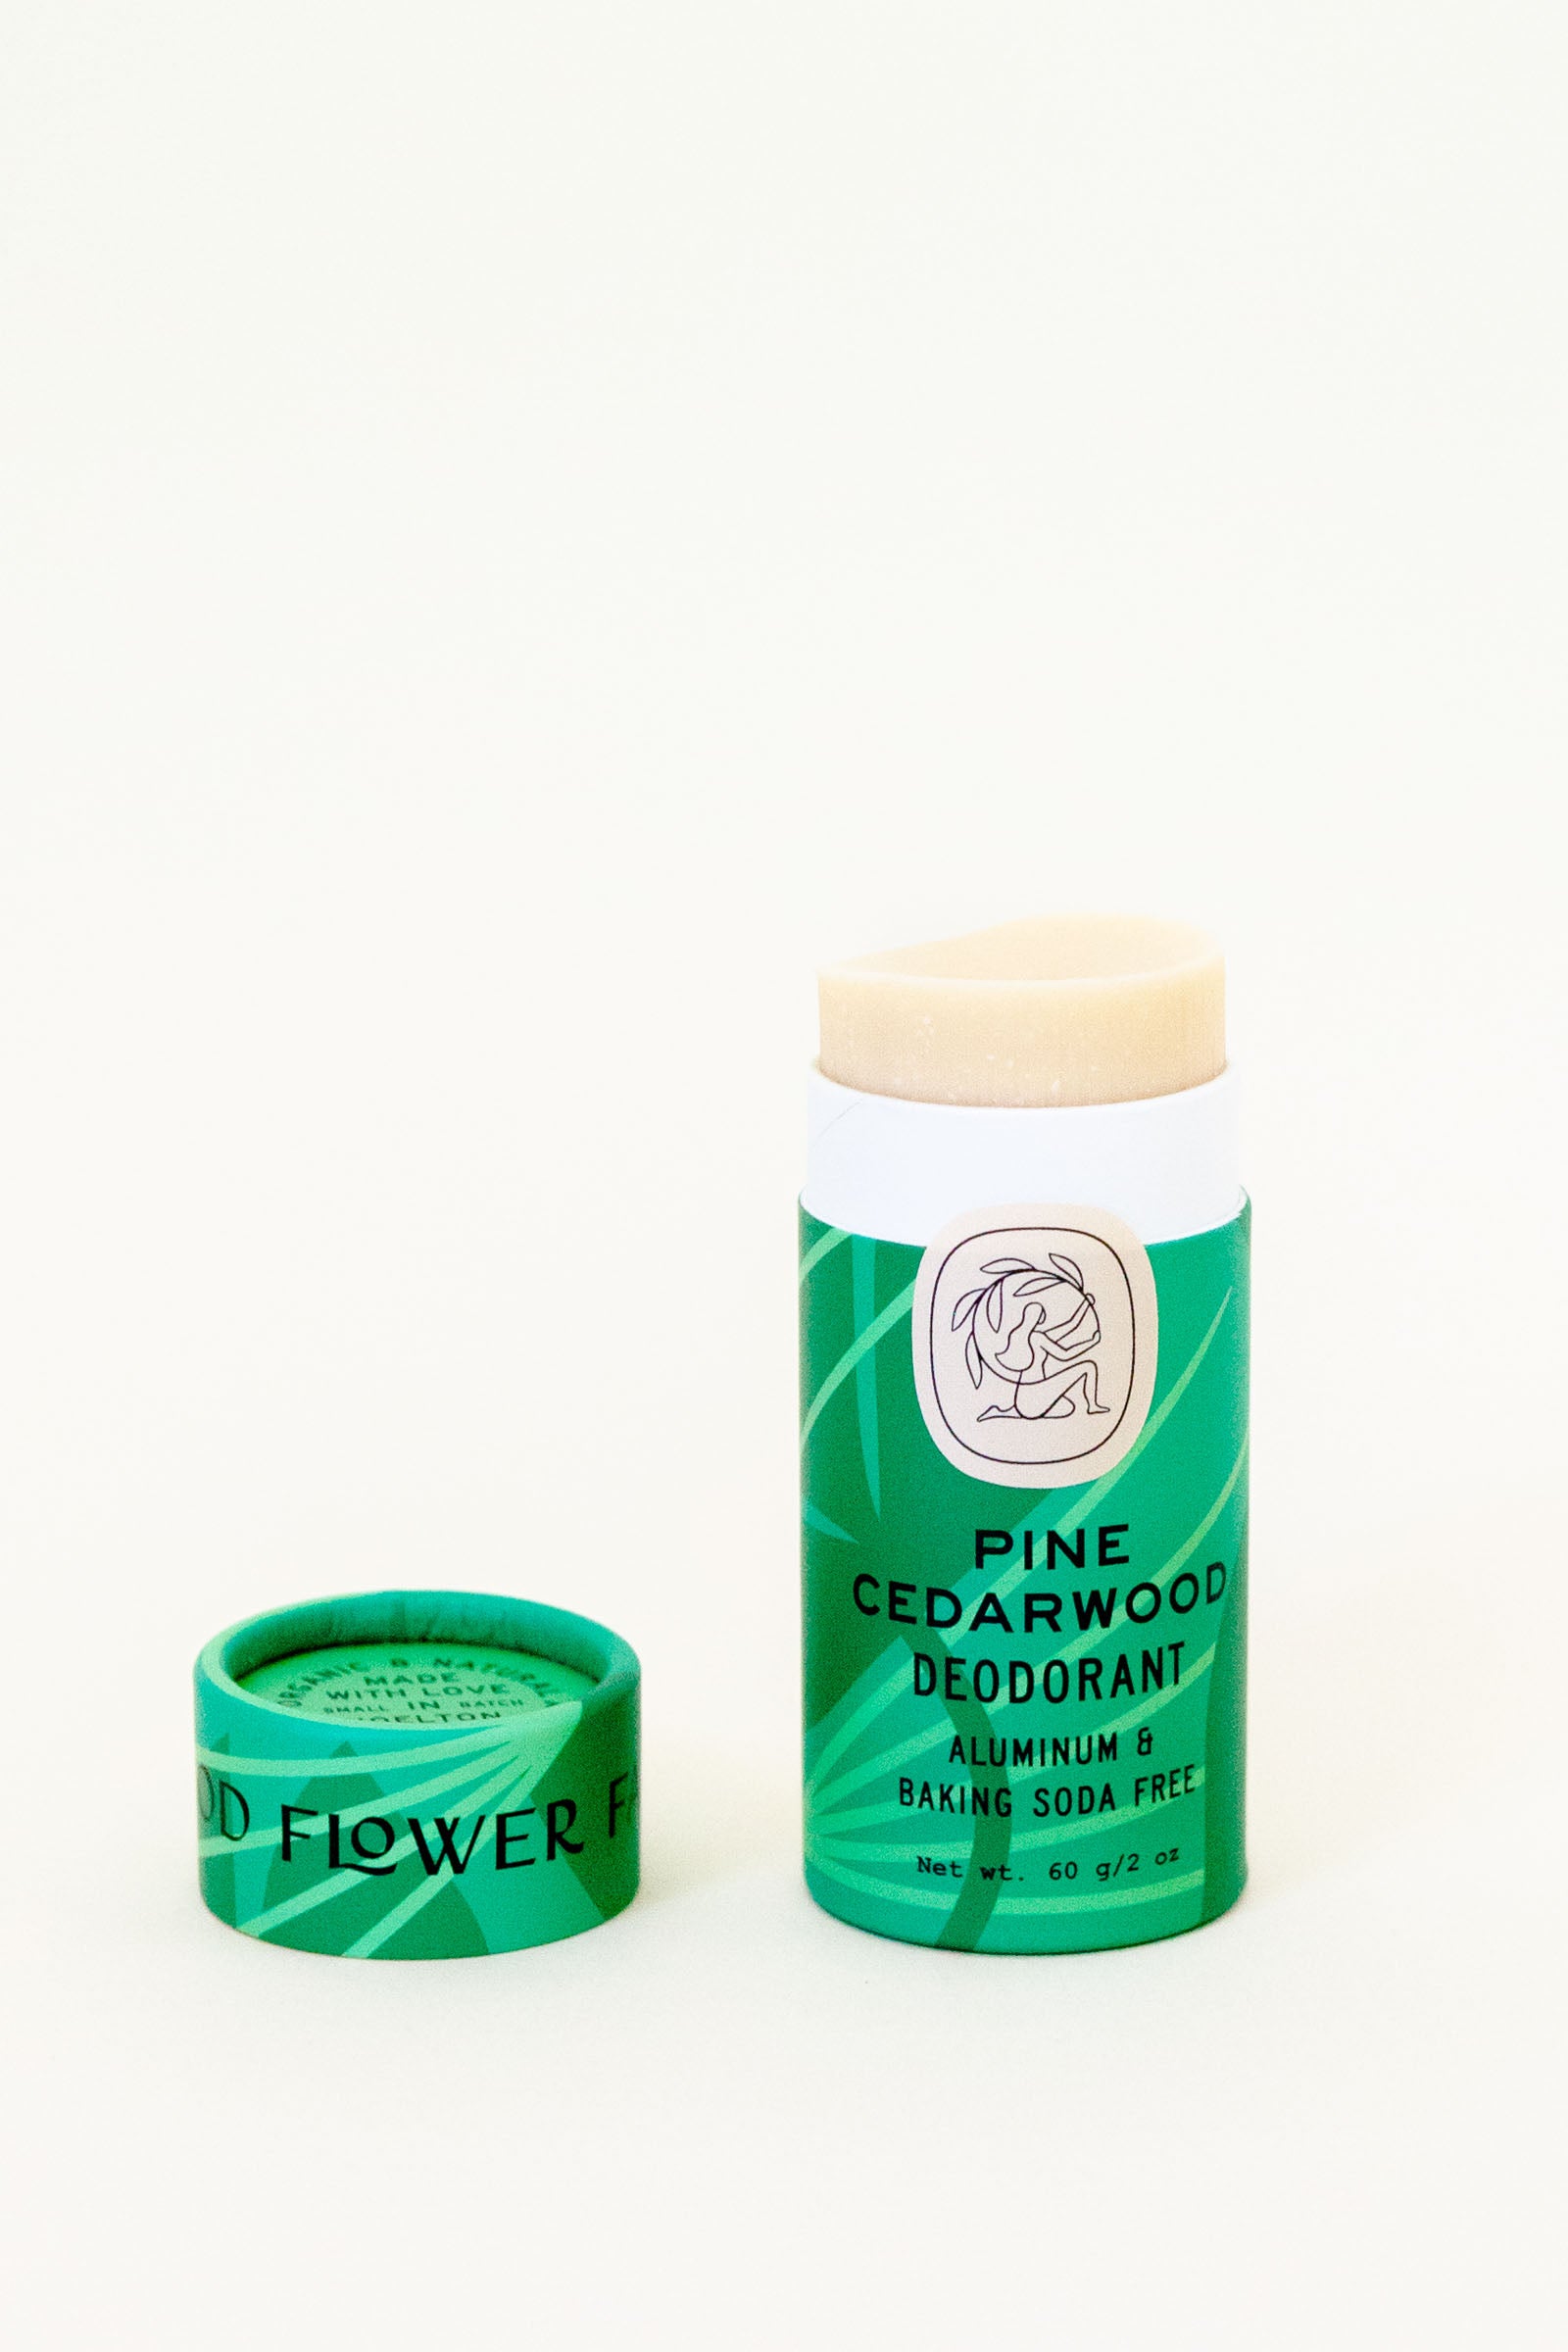 Organic pine cedarwood aluminum & baking soda natural deodorant in biodegradable plastic-free tube by Good Flower Farm